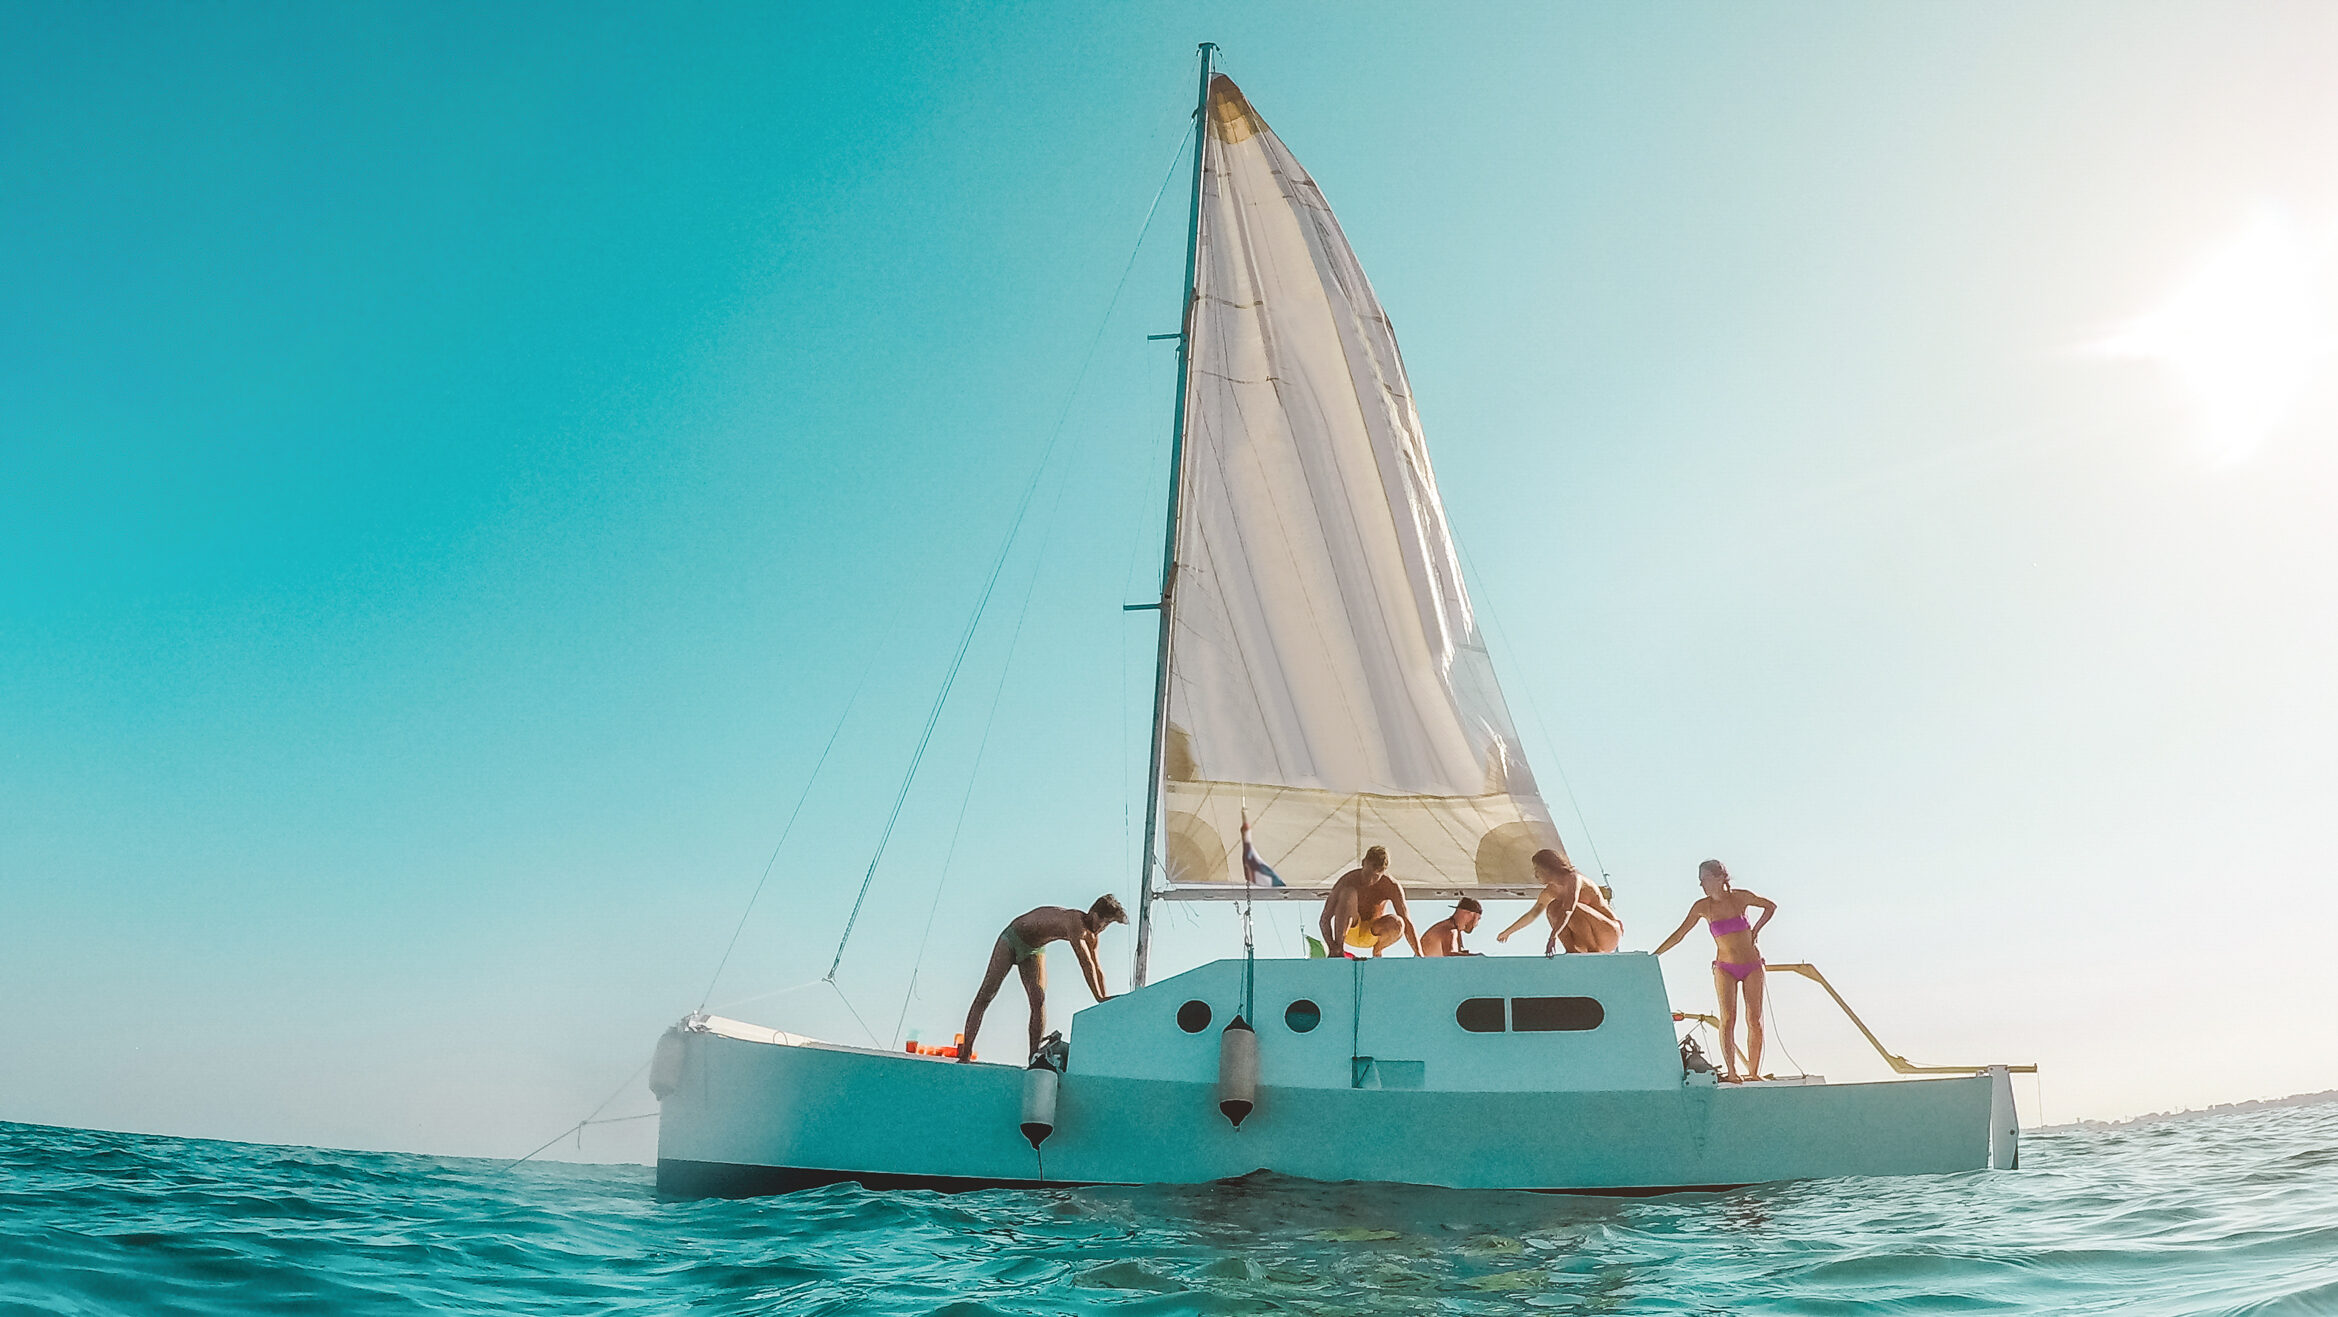 Croatia tour group on a yacht